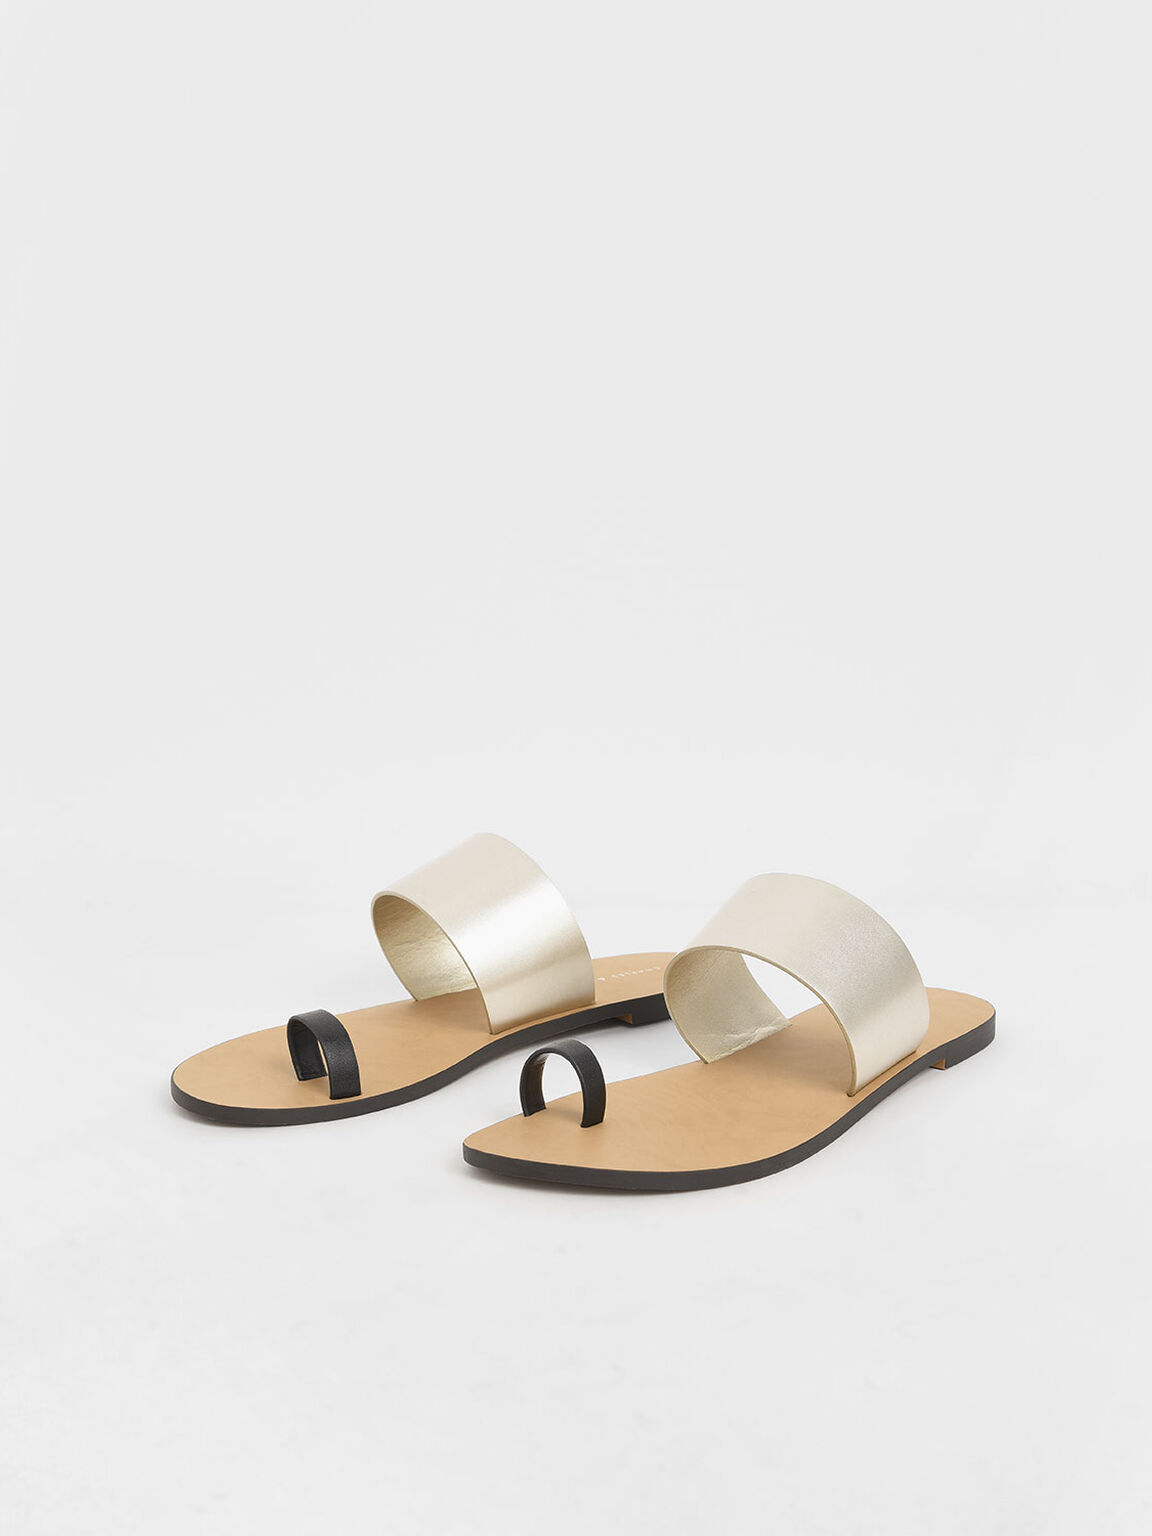 Toe Loop Slide Sandals, Gold, hi-res